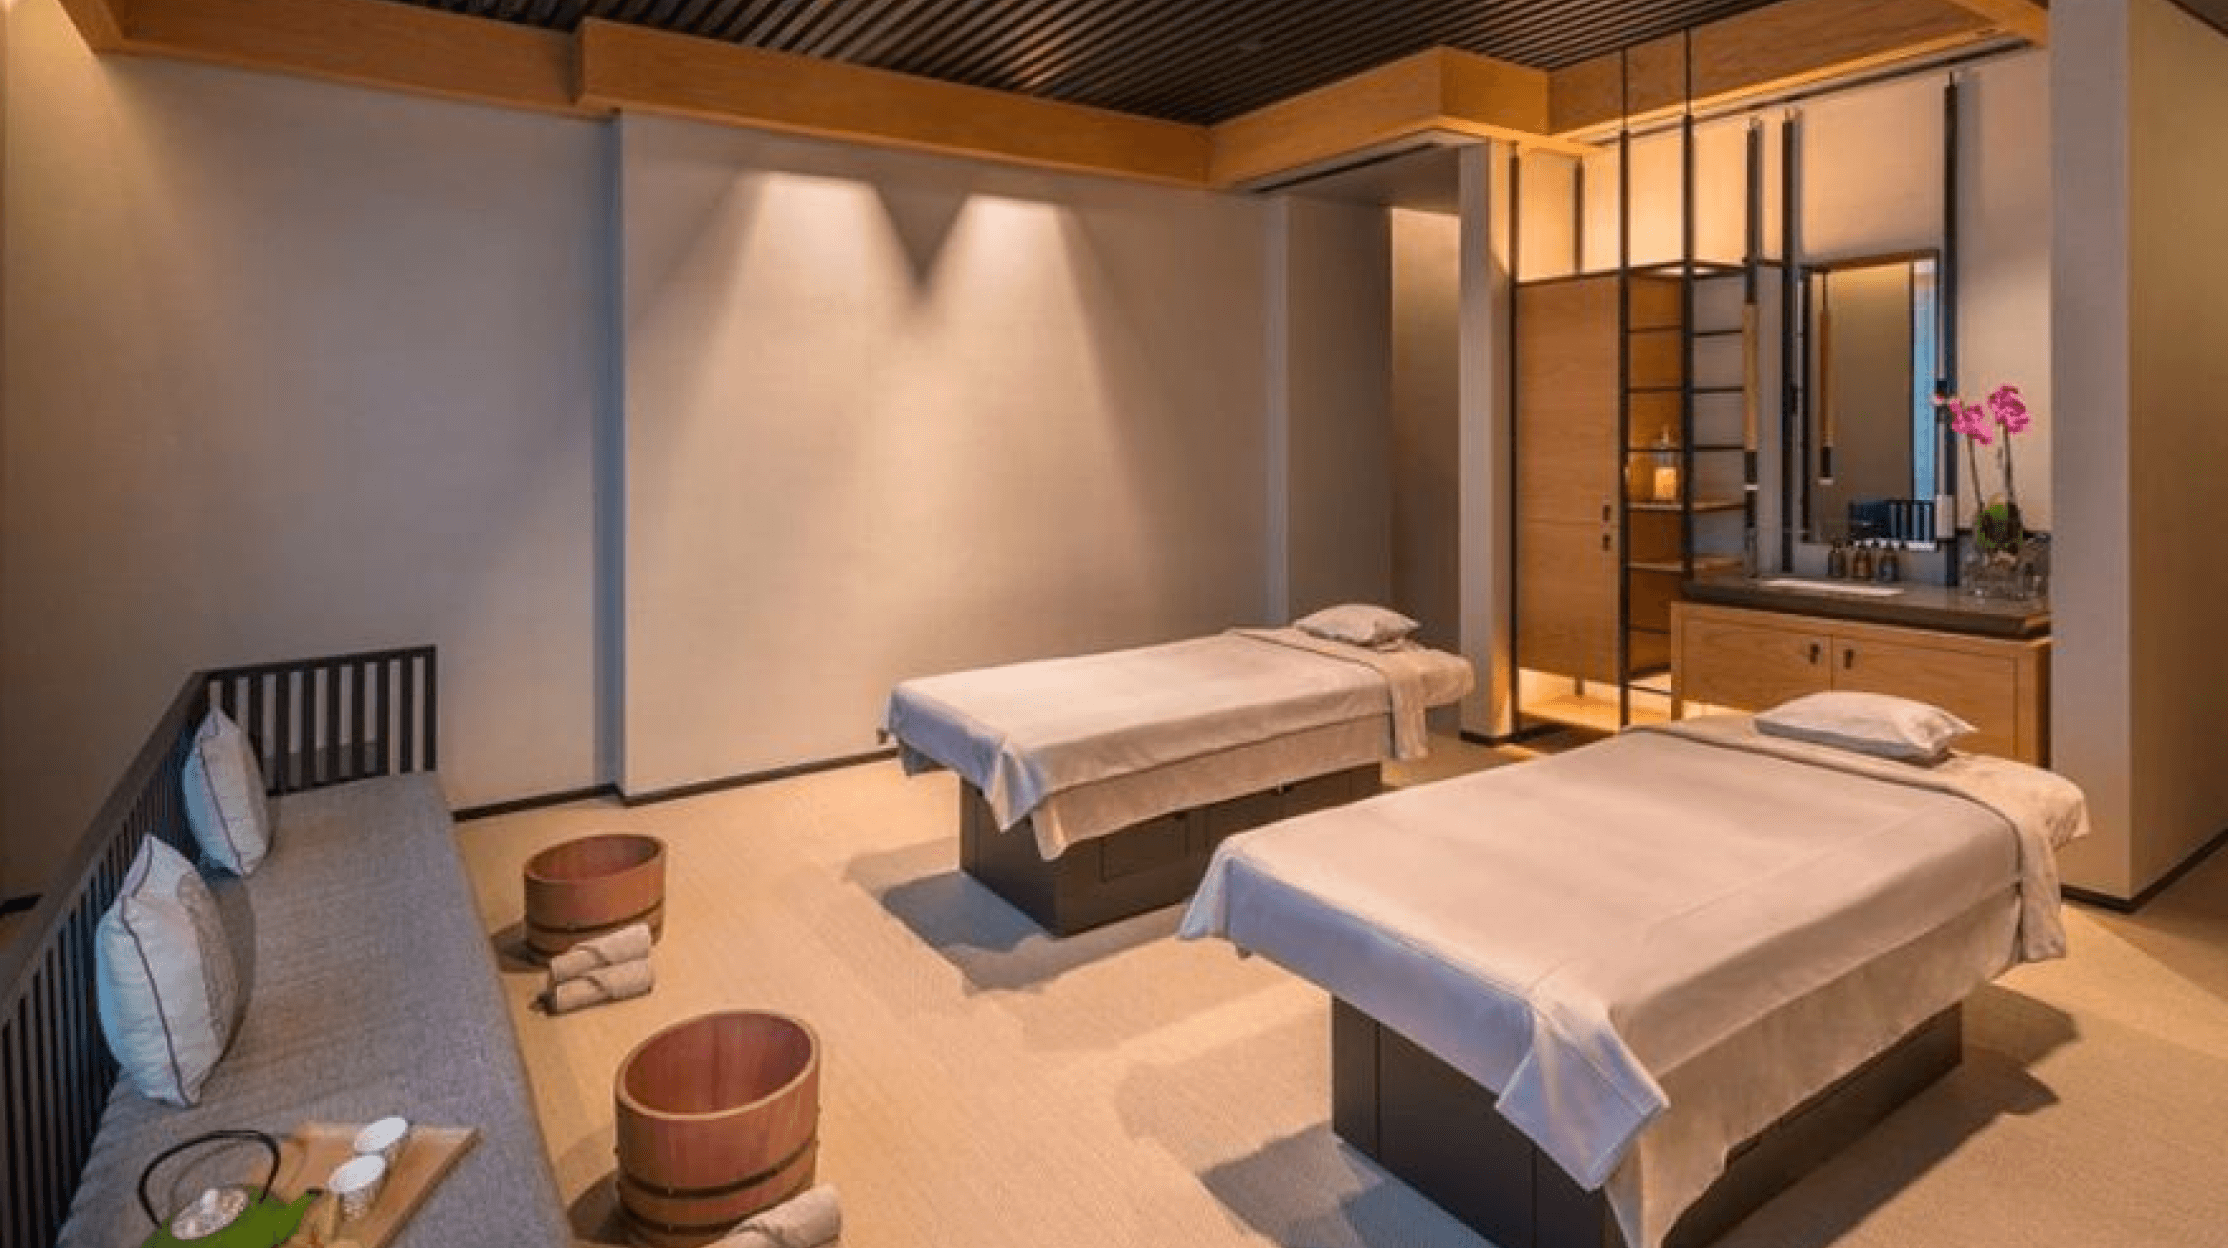 Qua Spa 30-minute Body Treatment at Caesars Palace Dubai